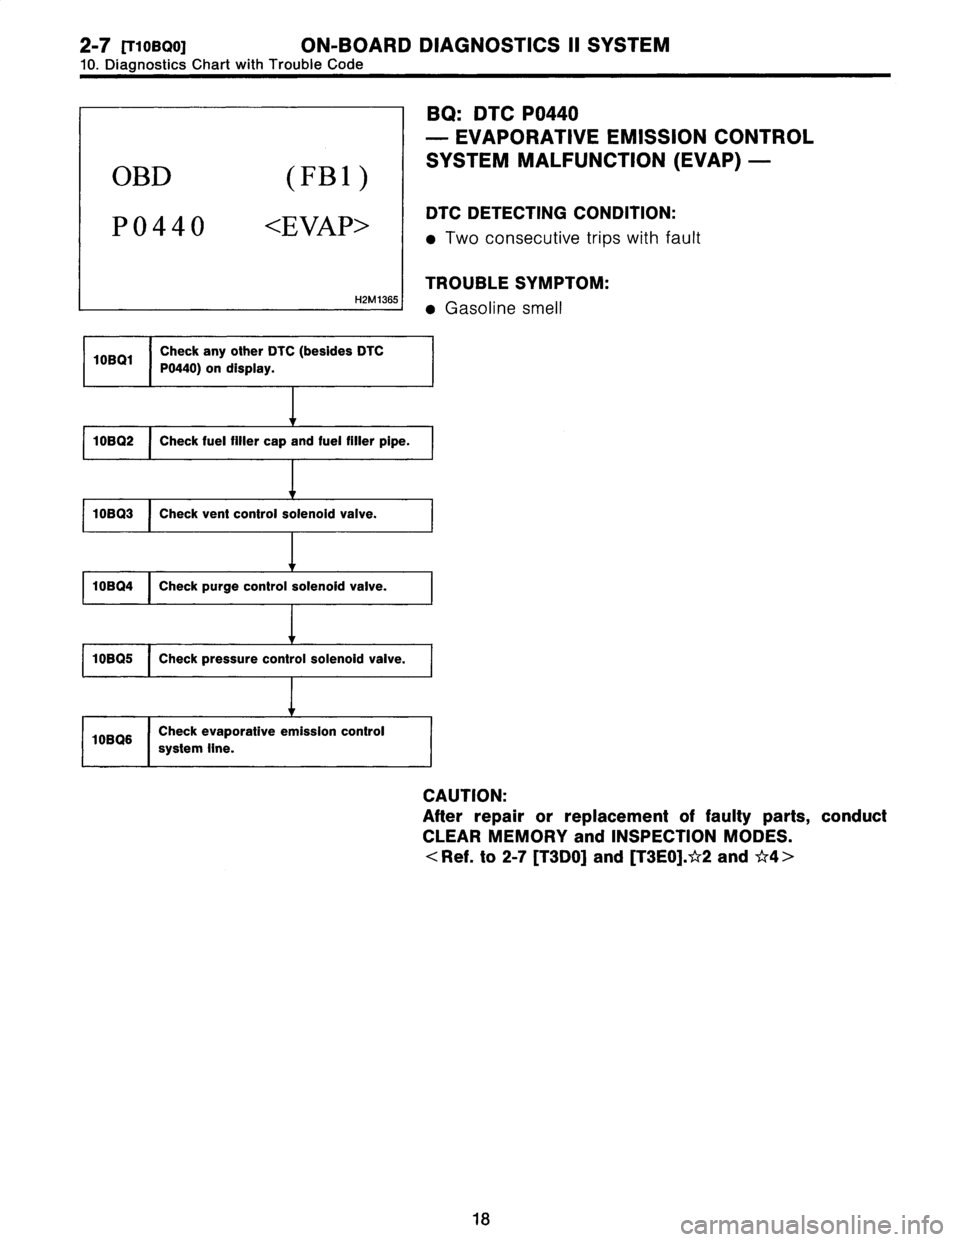 SUBARU LEGACY 1996  Service Repair Manual 2-7
R1oBOO]
ON-BOARD
DIAGNOSTICS
II
SYSTEM

10
.
Diagnostics
Chart
with
Trouble
Code

OBD
(FBI)

P0440
<EVAP>

H2M1365

BQ
:
DTC
P0440

-
EVAPORATIVE
EMISSION
CONTROL

SYSTEM
MALFUNCTION
(EVAP)
-

DTC